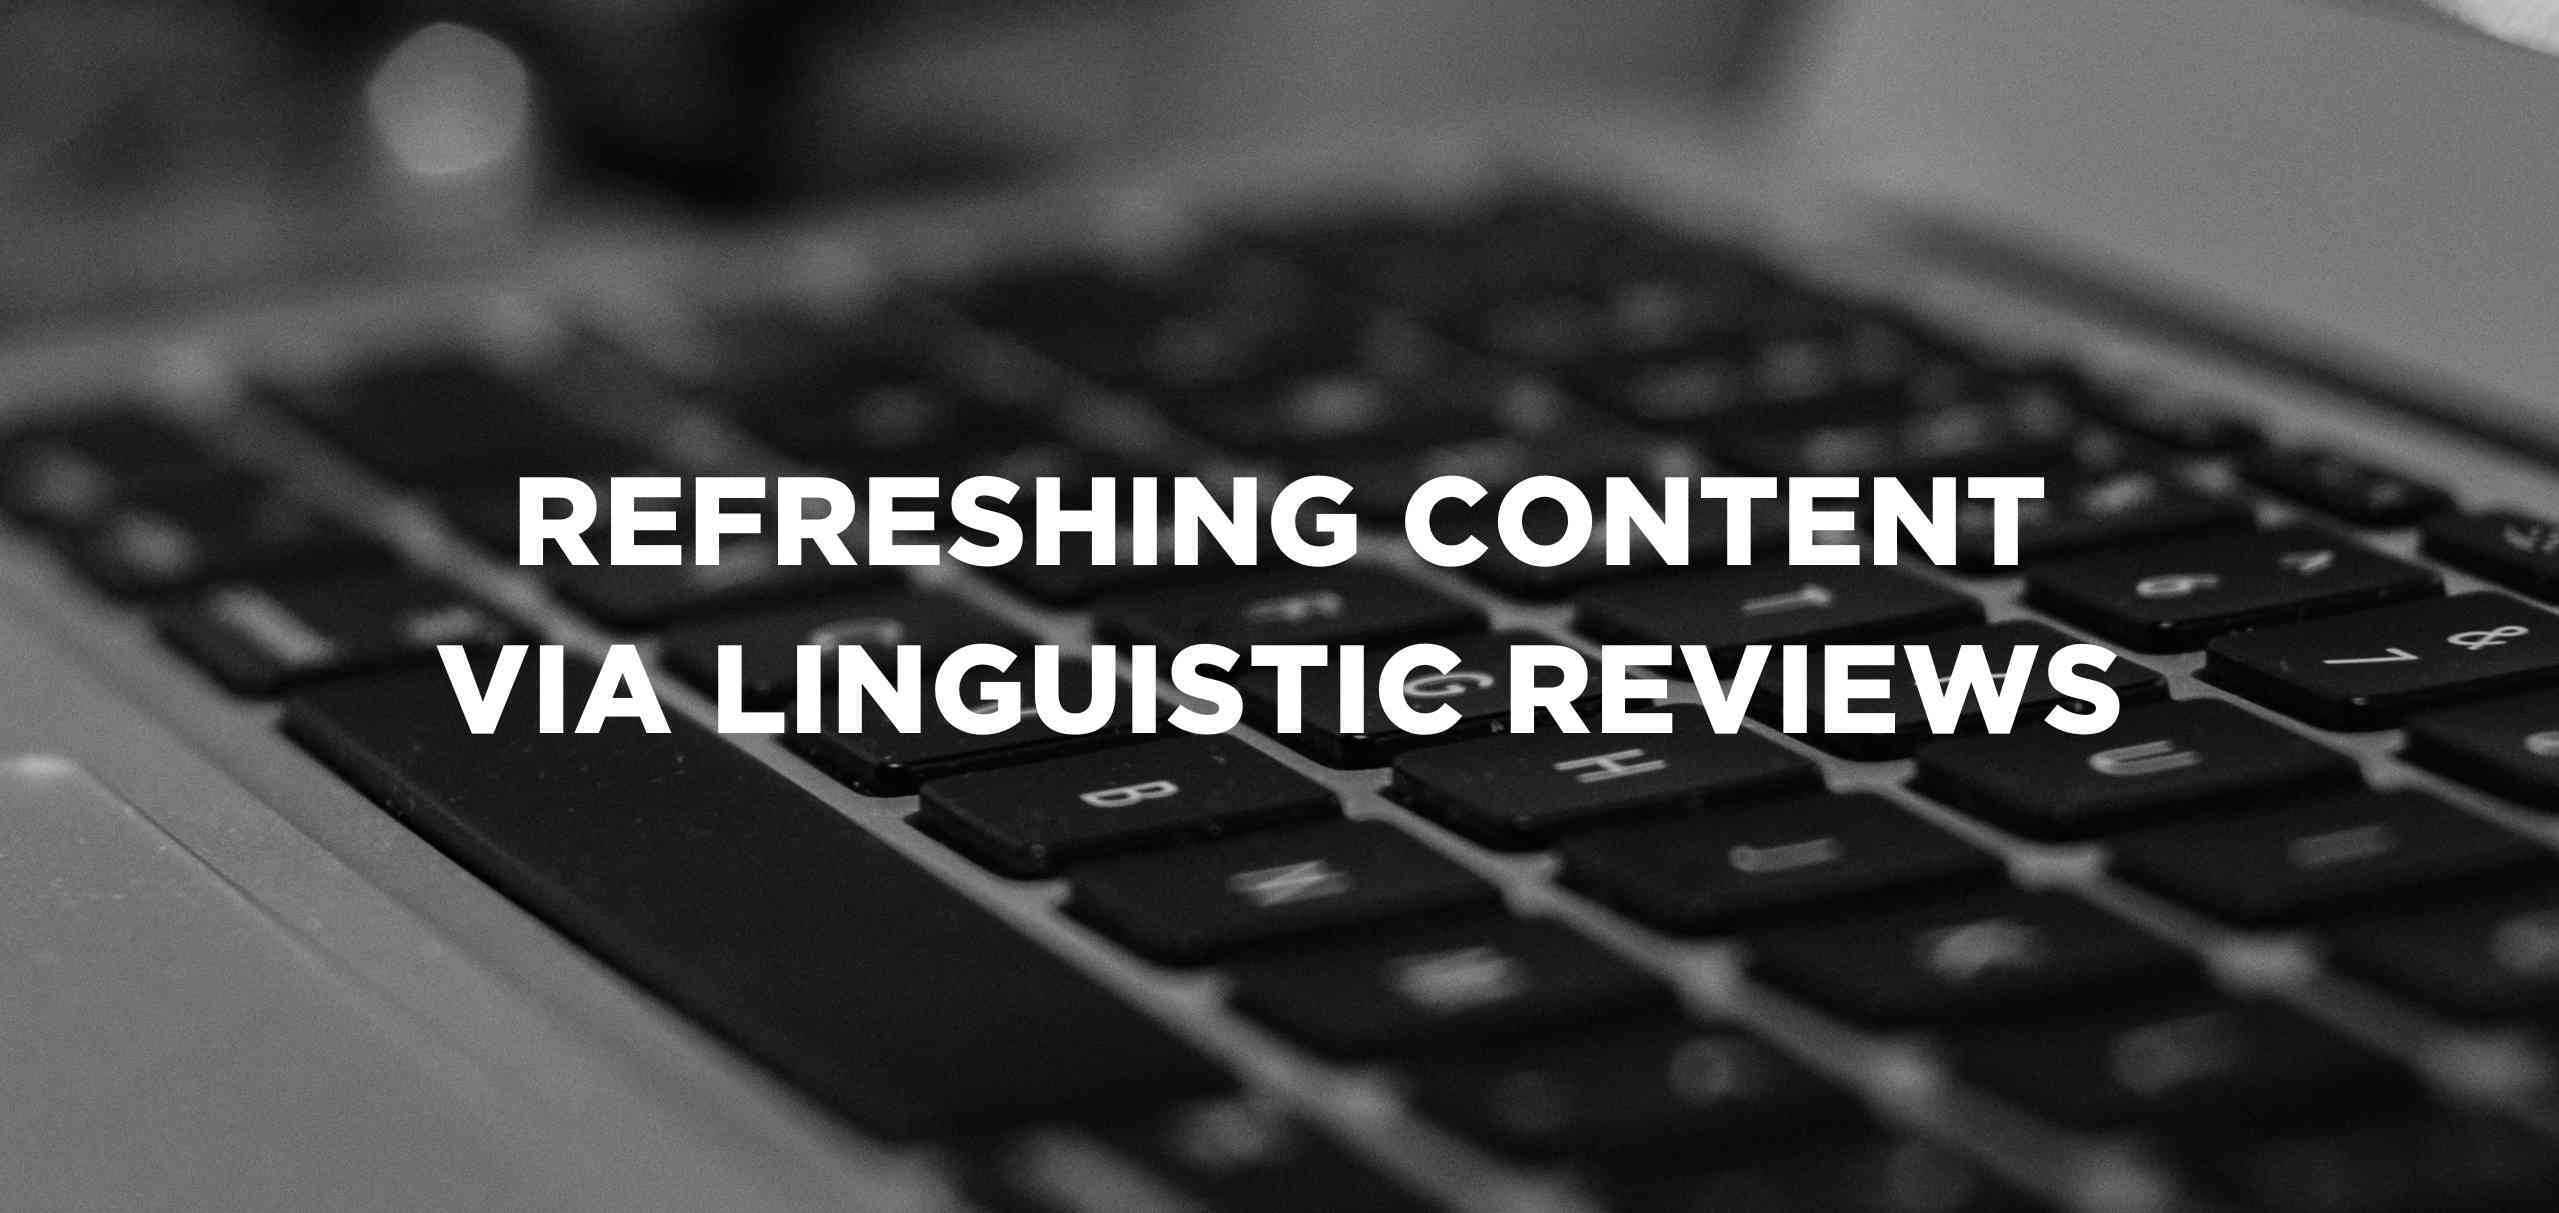 Refreshing content via linguistic reviews